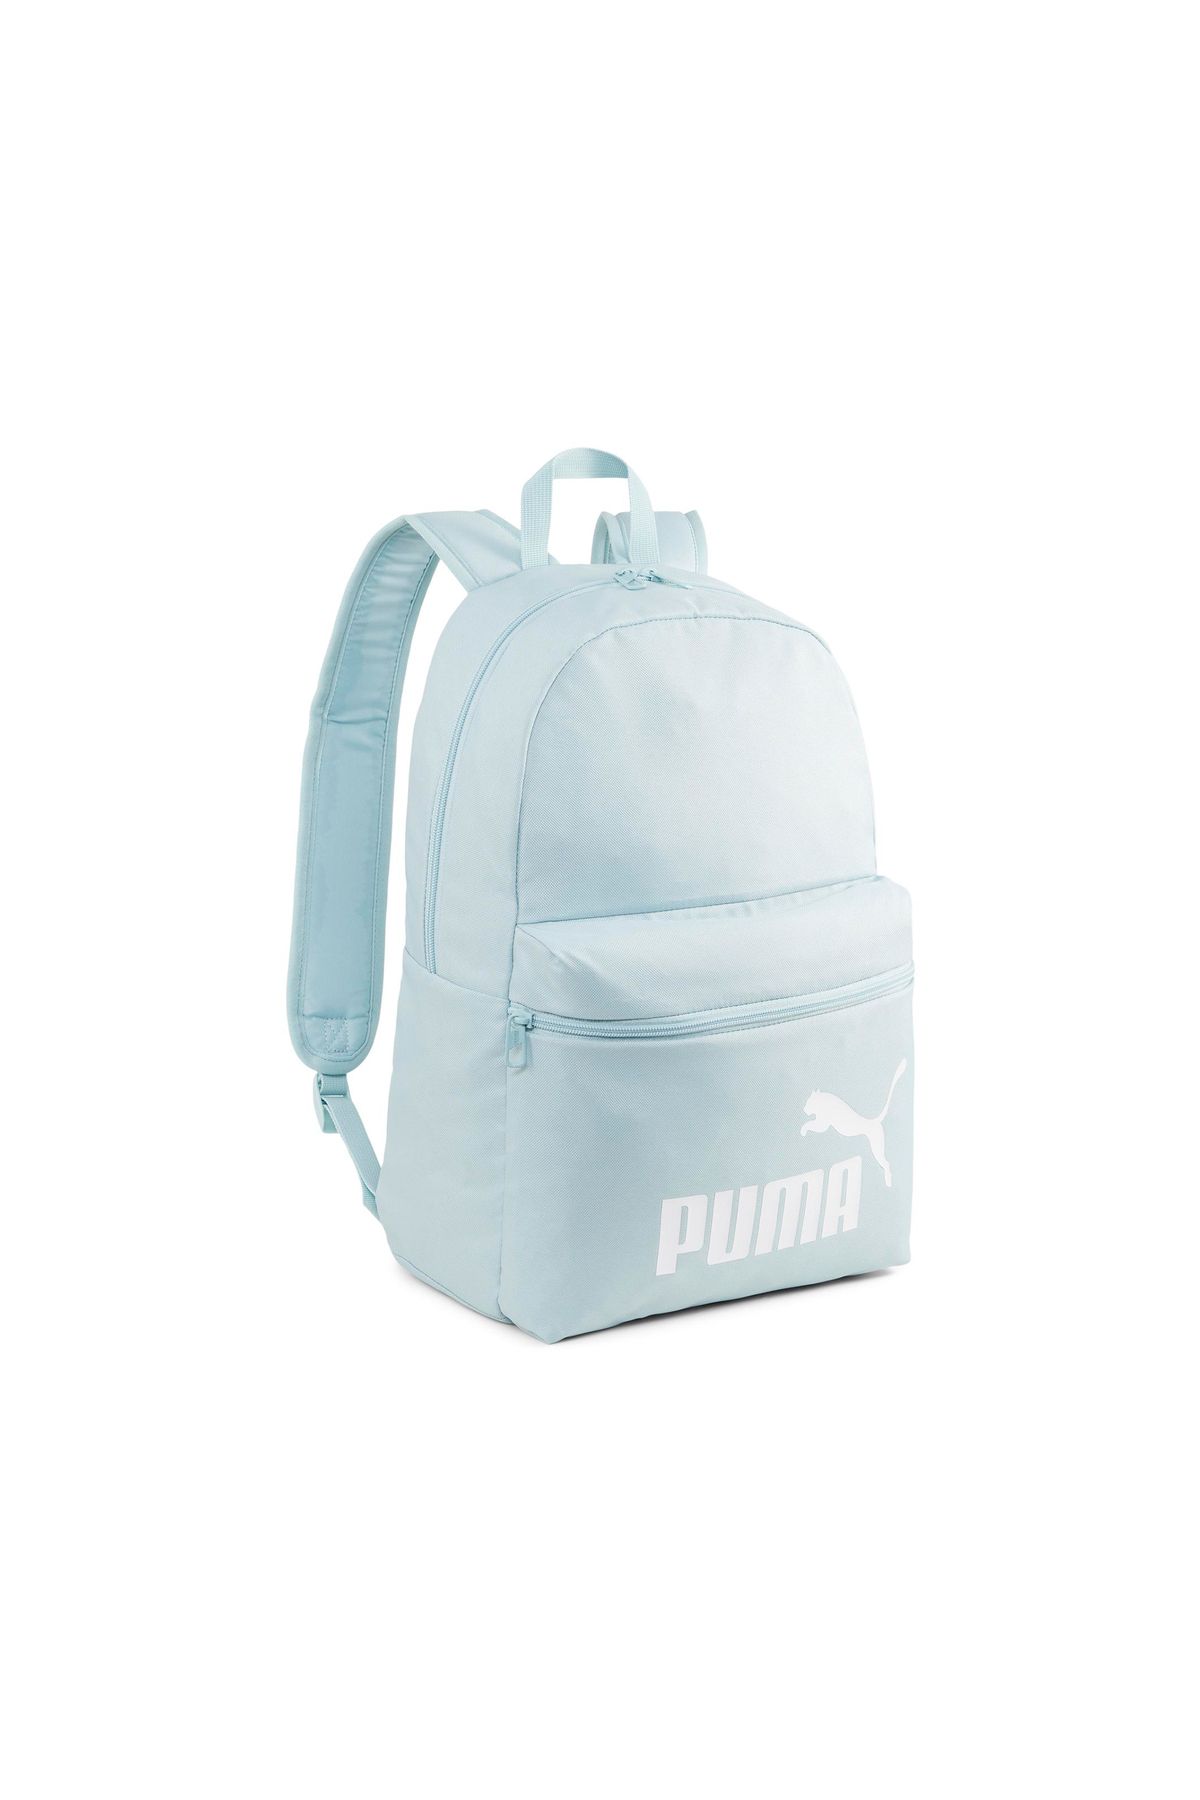 Puma Puma Phase Backpack Sırt Çantası 7994314 Mavi